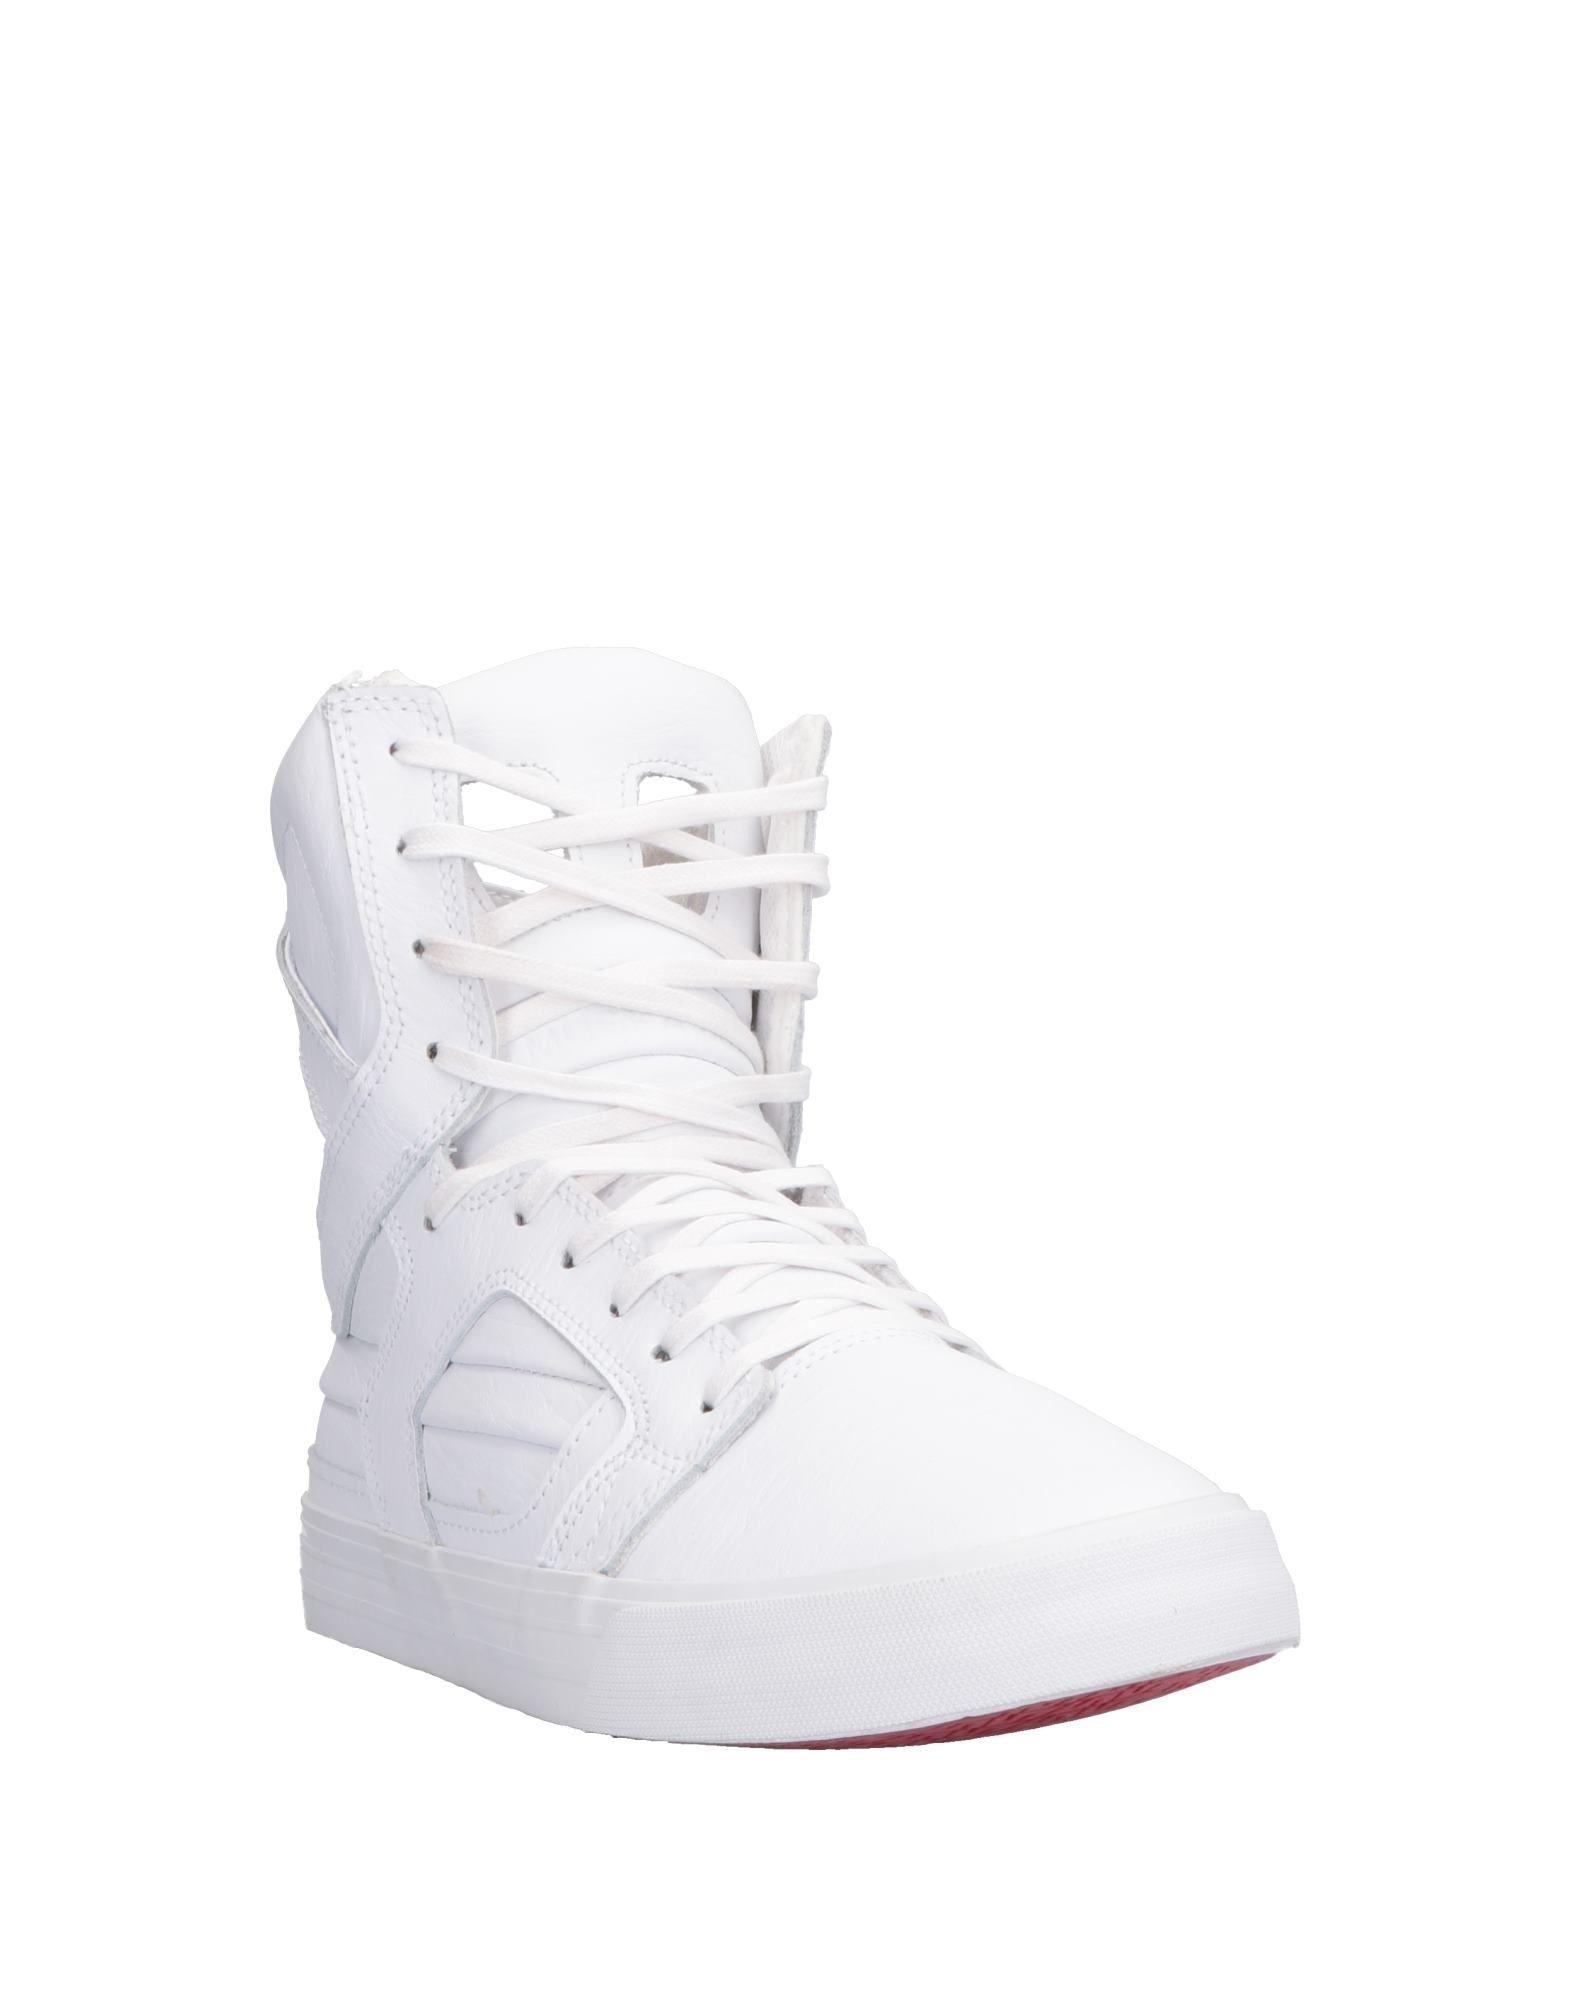 supra white high top sneakers